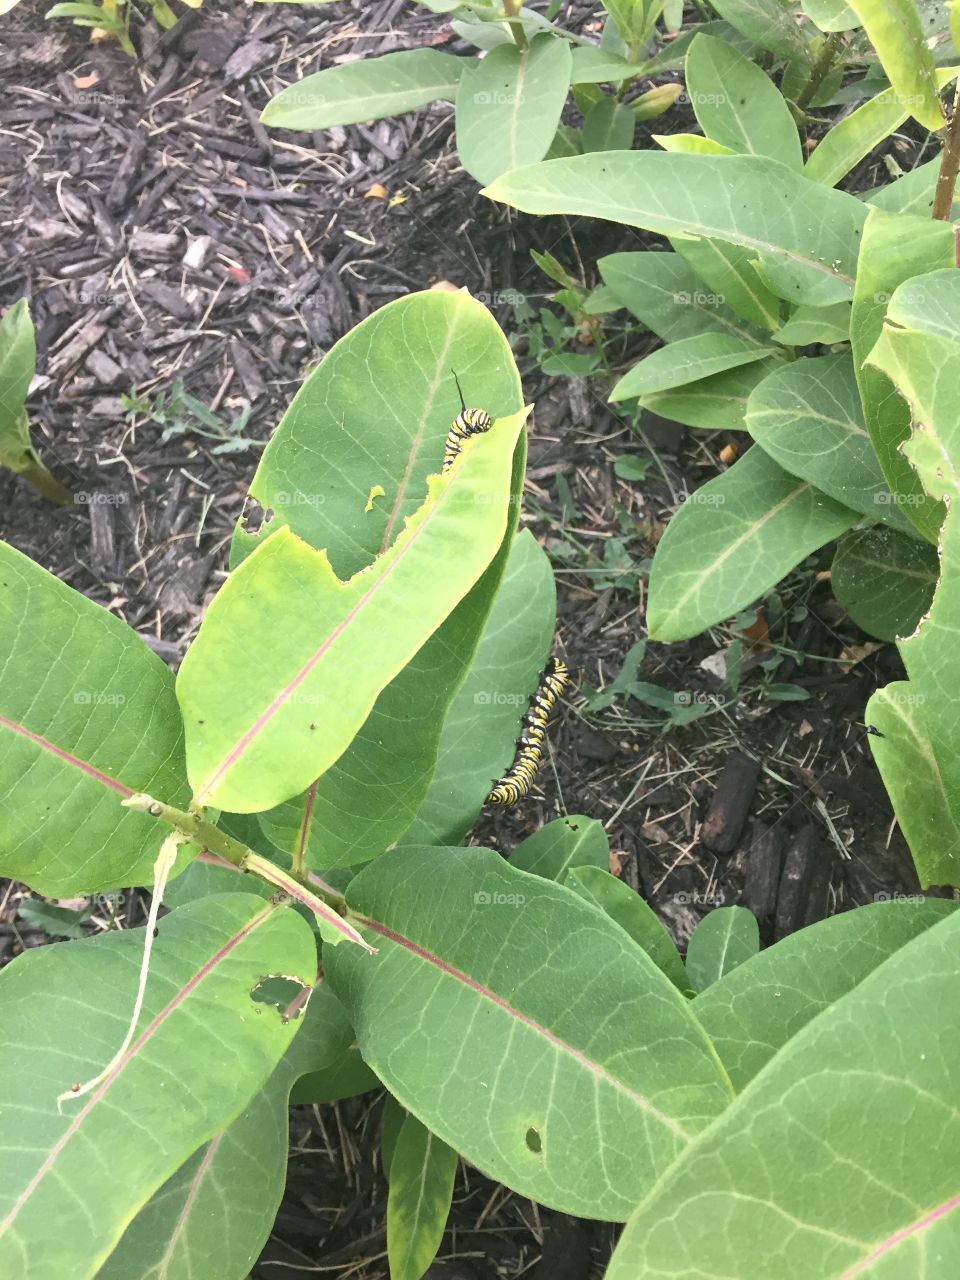 Caterpillars on leaves